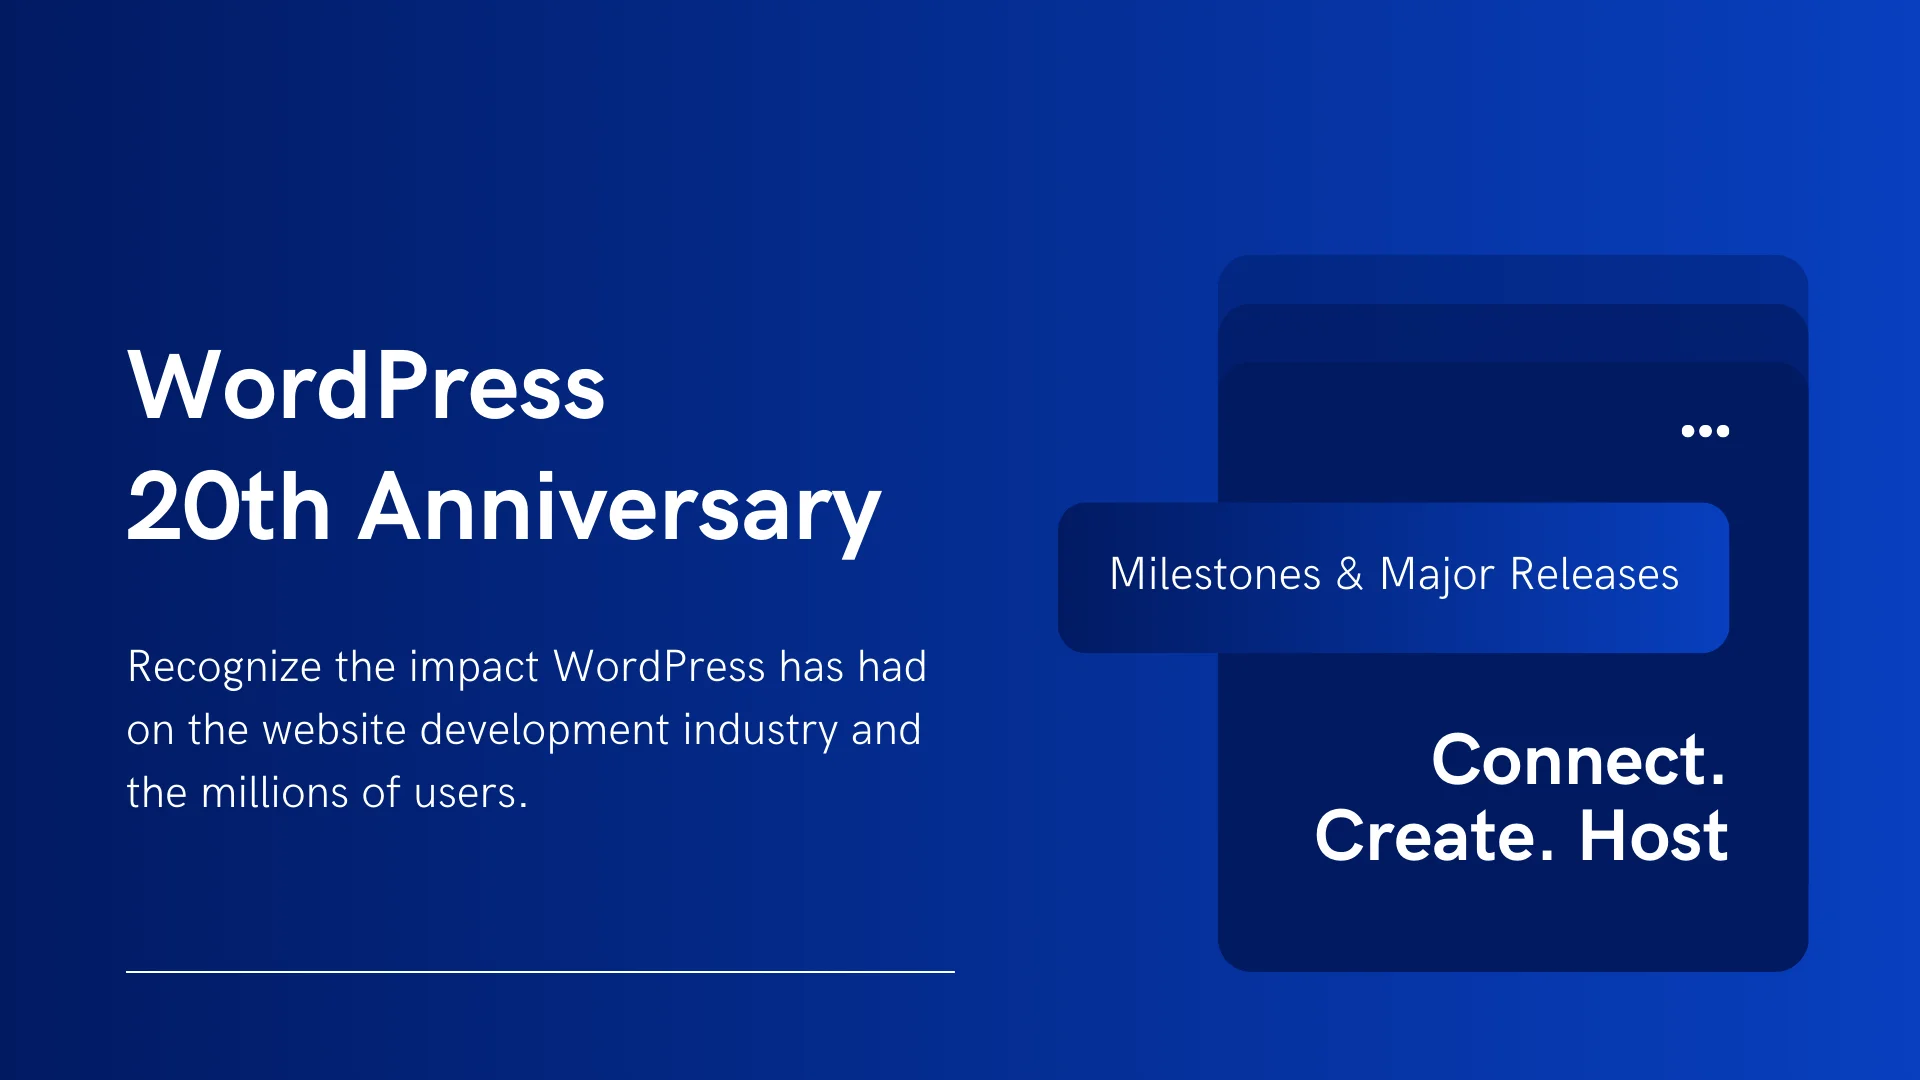 Celebrating WordPress’s 20th Anniversary